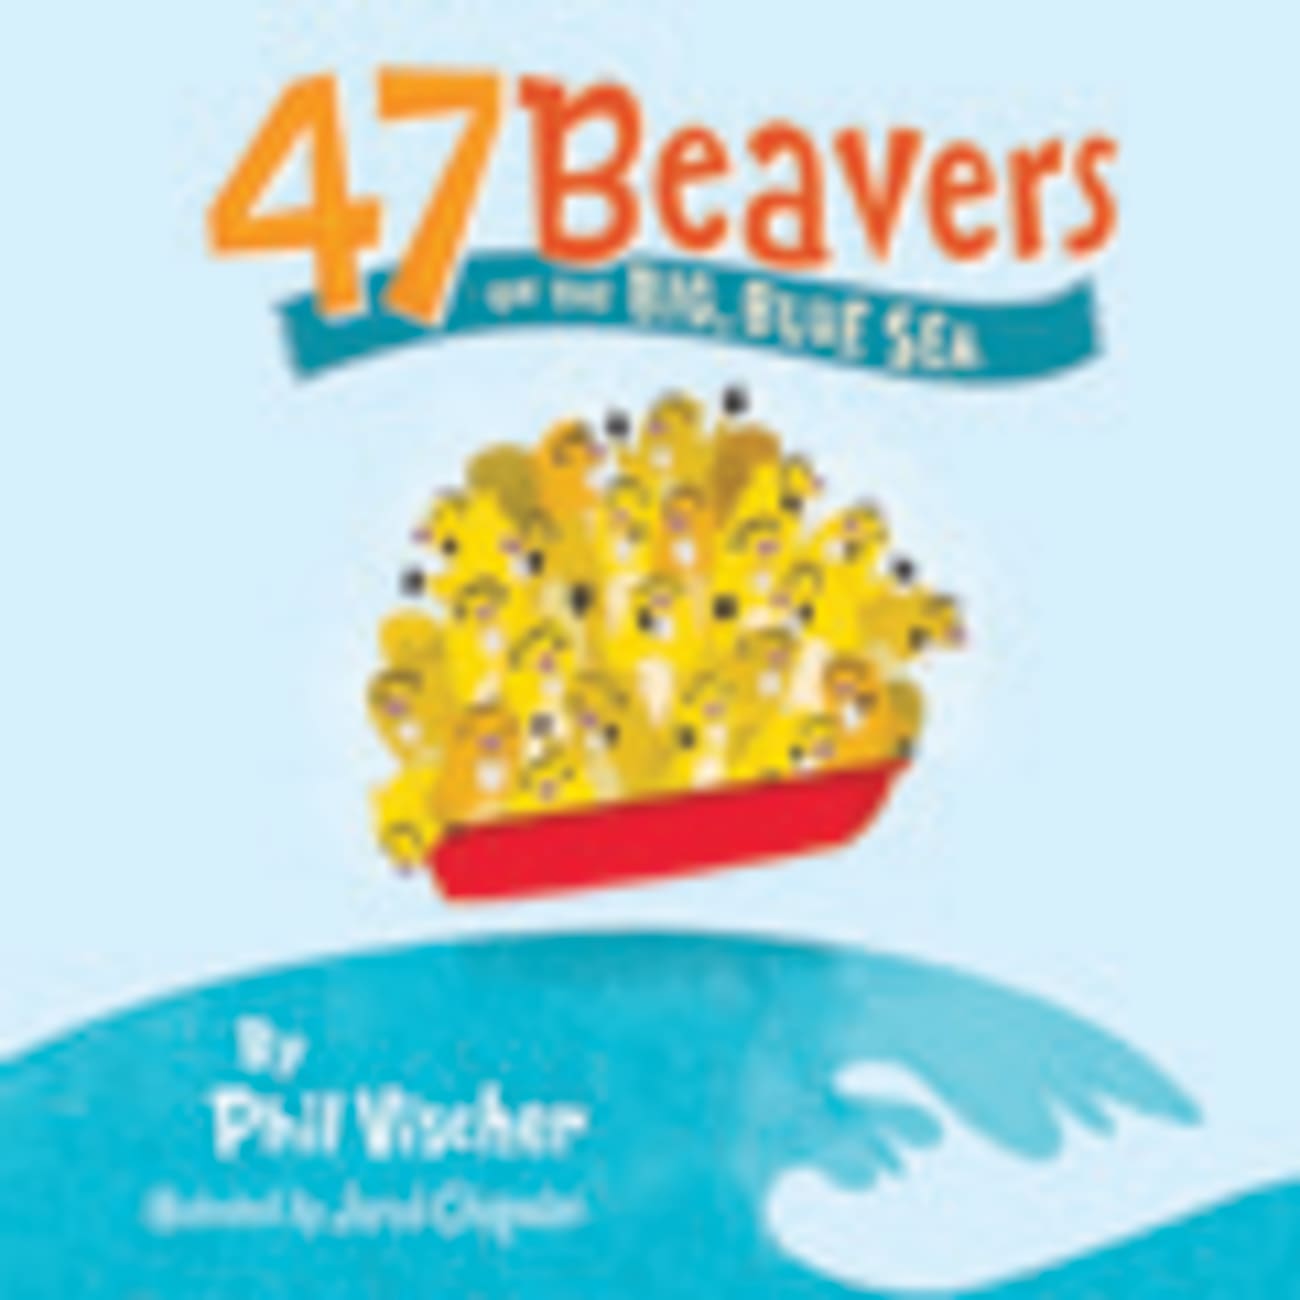 47 Beavers on the Big Blue Sea Paperback